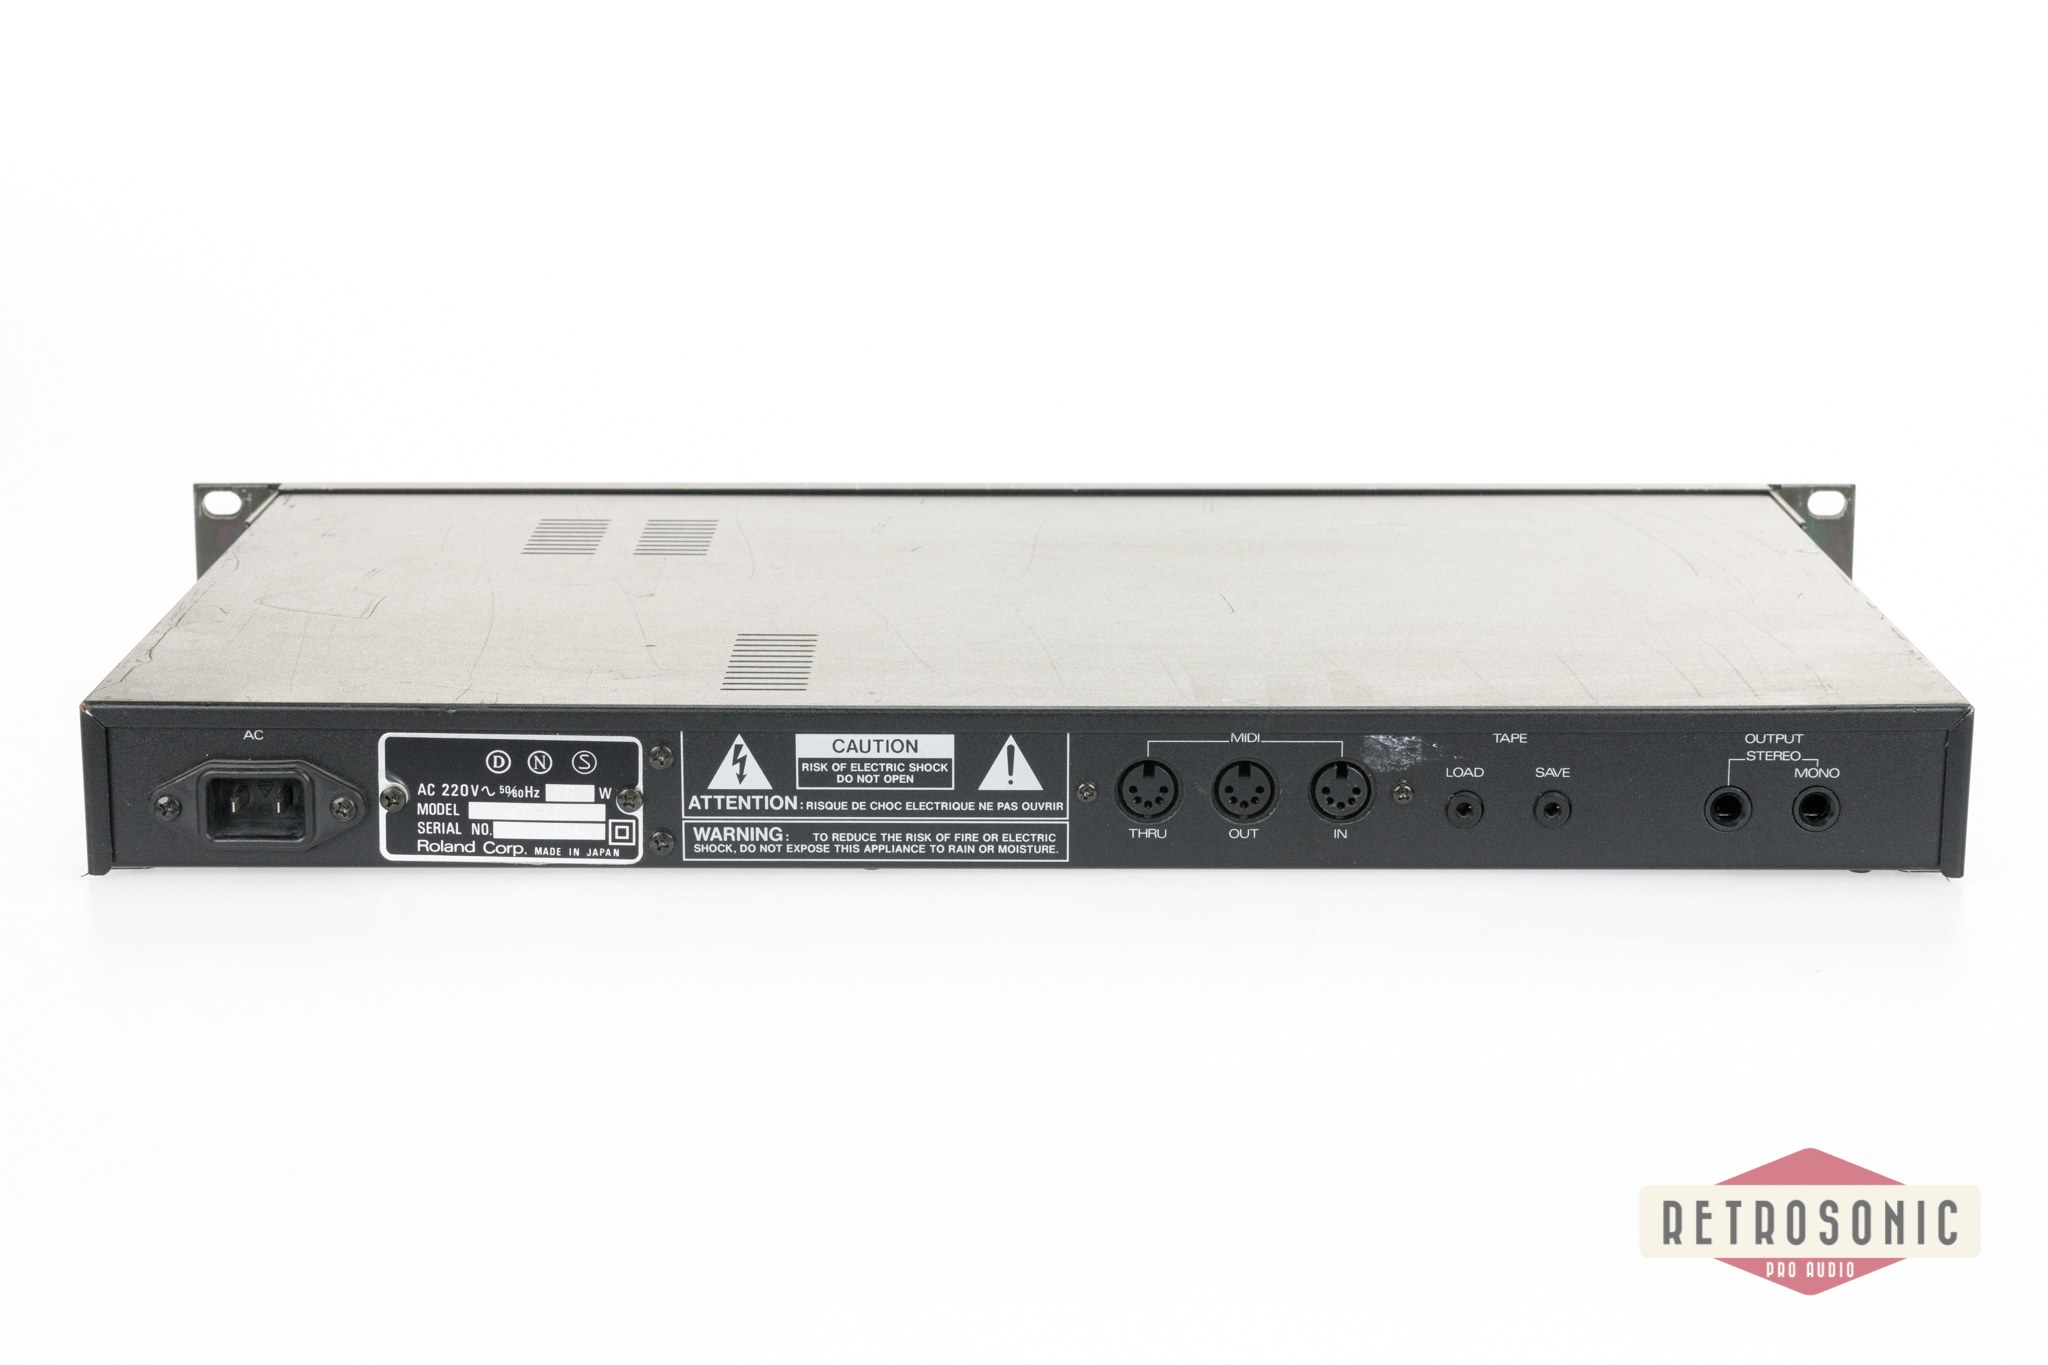 Roland MKS-50 Analog Polyphonic Synthesizer Rack (Alpha Juno)